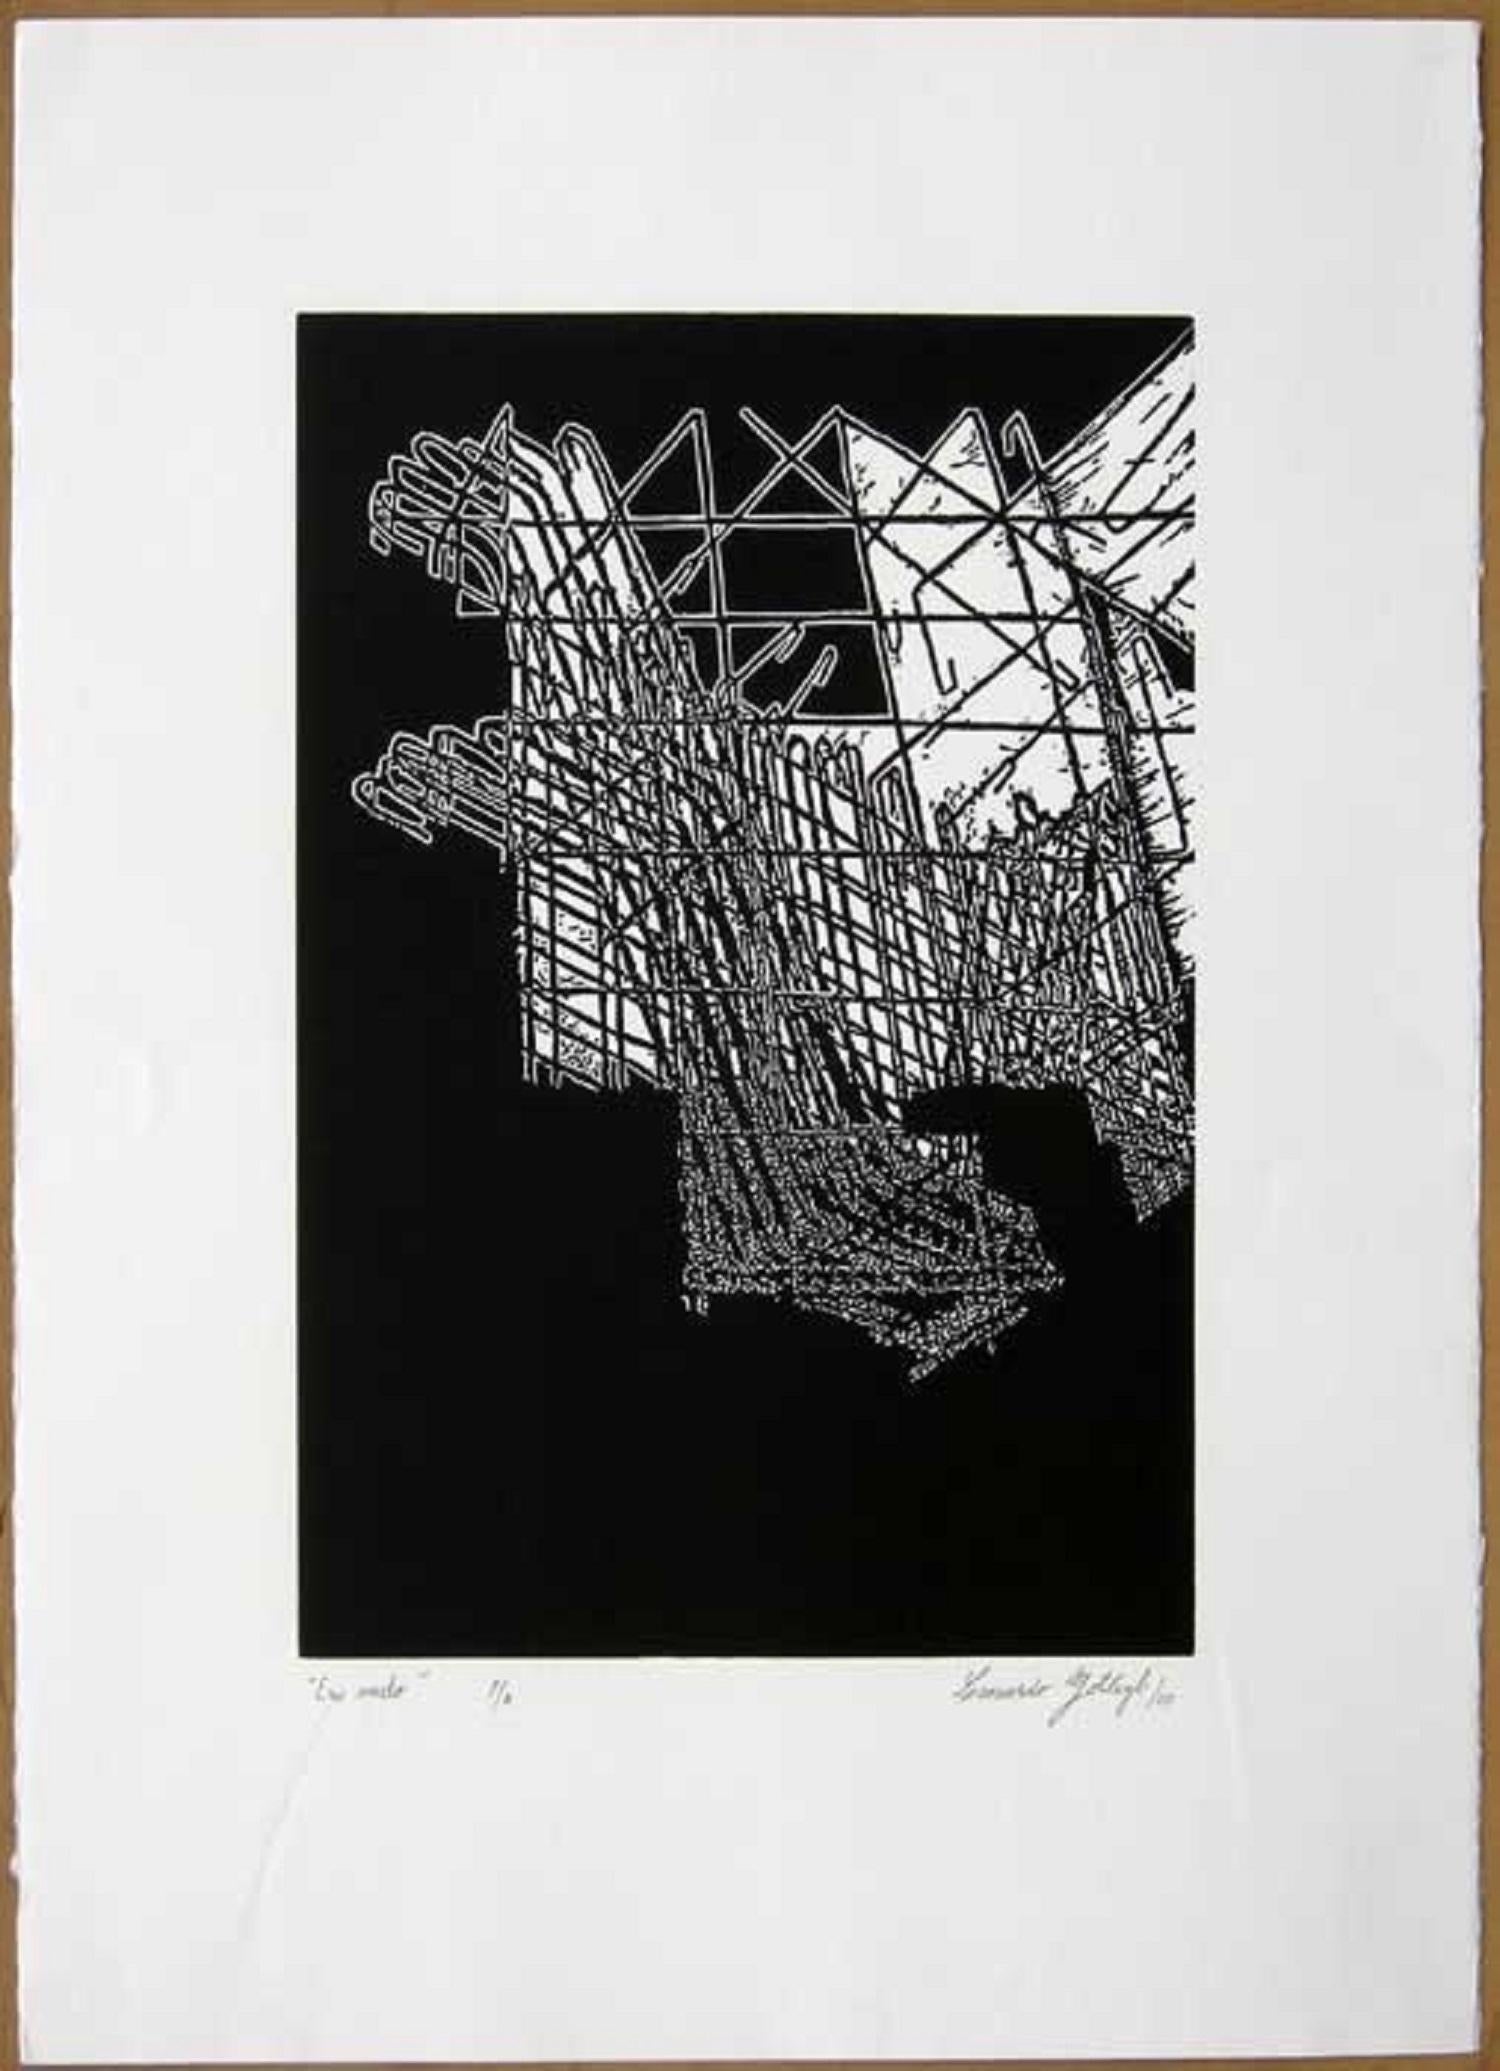 Leonardo Gotleyb (Argentina, 1958)
'En vuelo', 2000
woodcut on paper Velin Arches 300 g.
27.6 x 19.7 in. (70 x 50 cm.)
Edition of 25
ID: GOT-303
Unframed